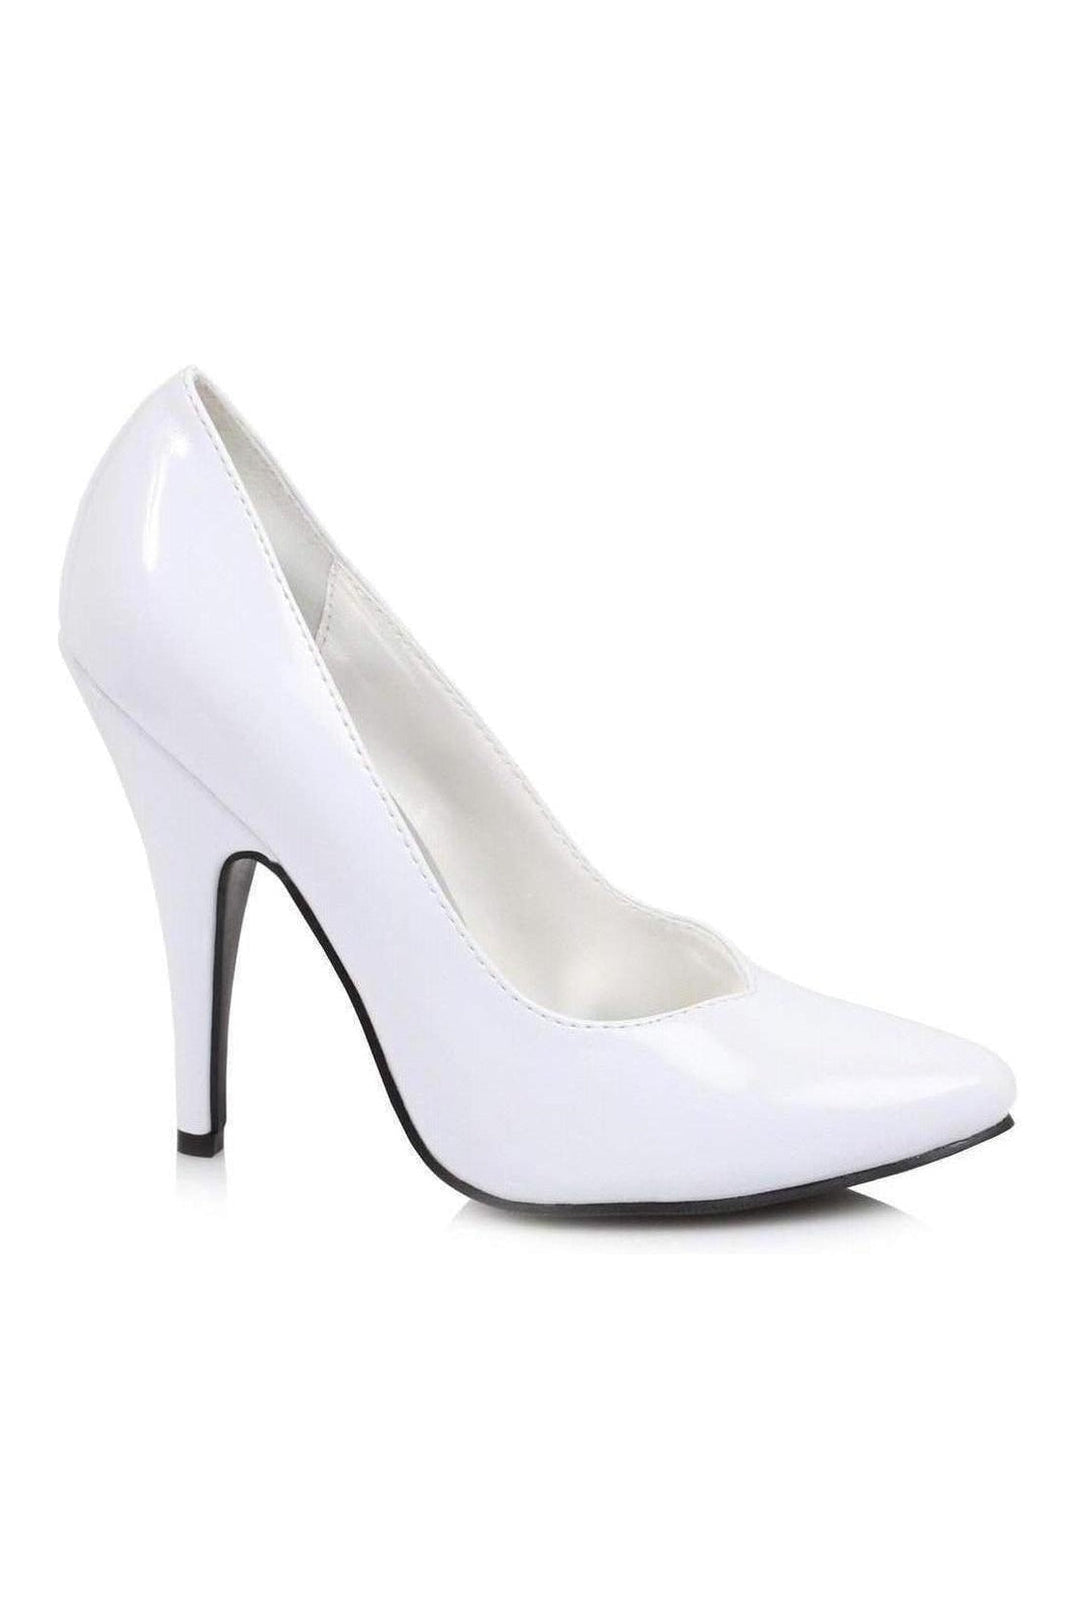 8220 Pump | White Patent-Pumps- Stripper Shoes at SEXYSHOES.COM